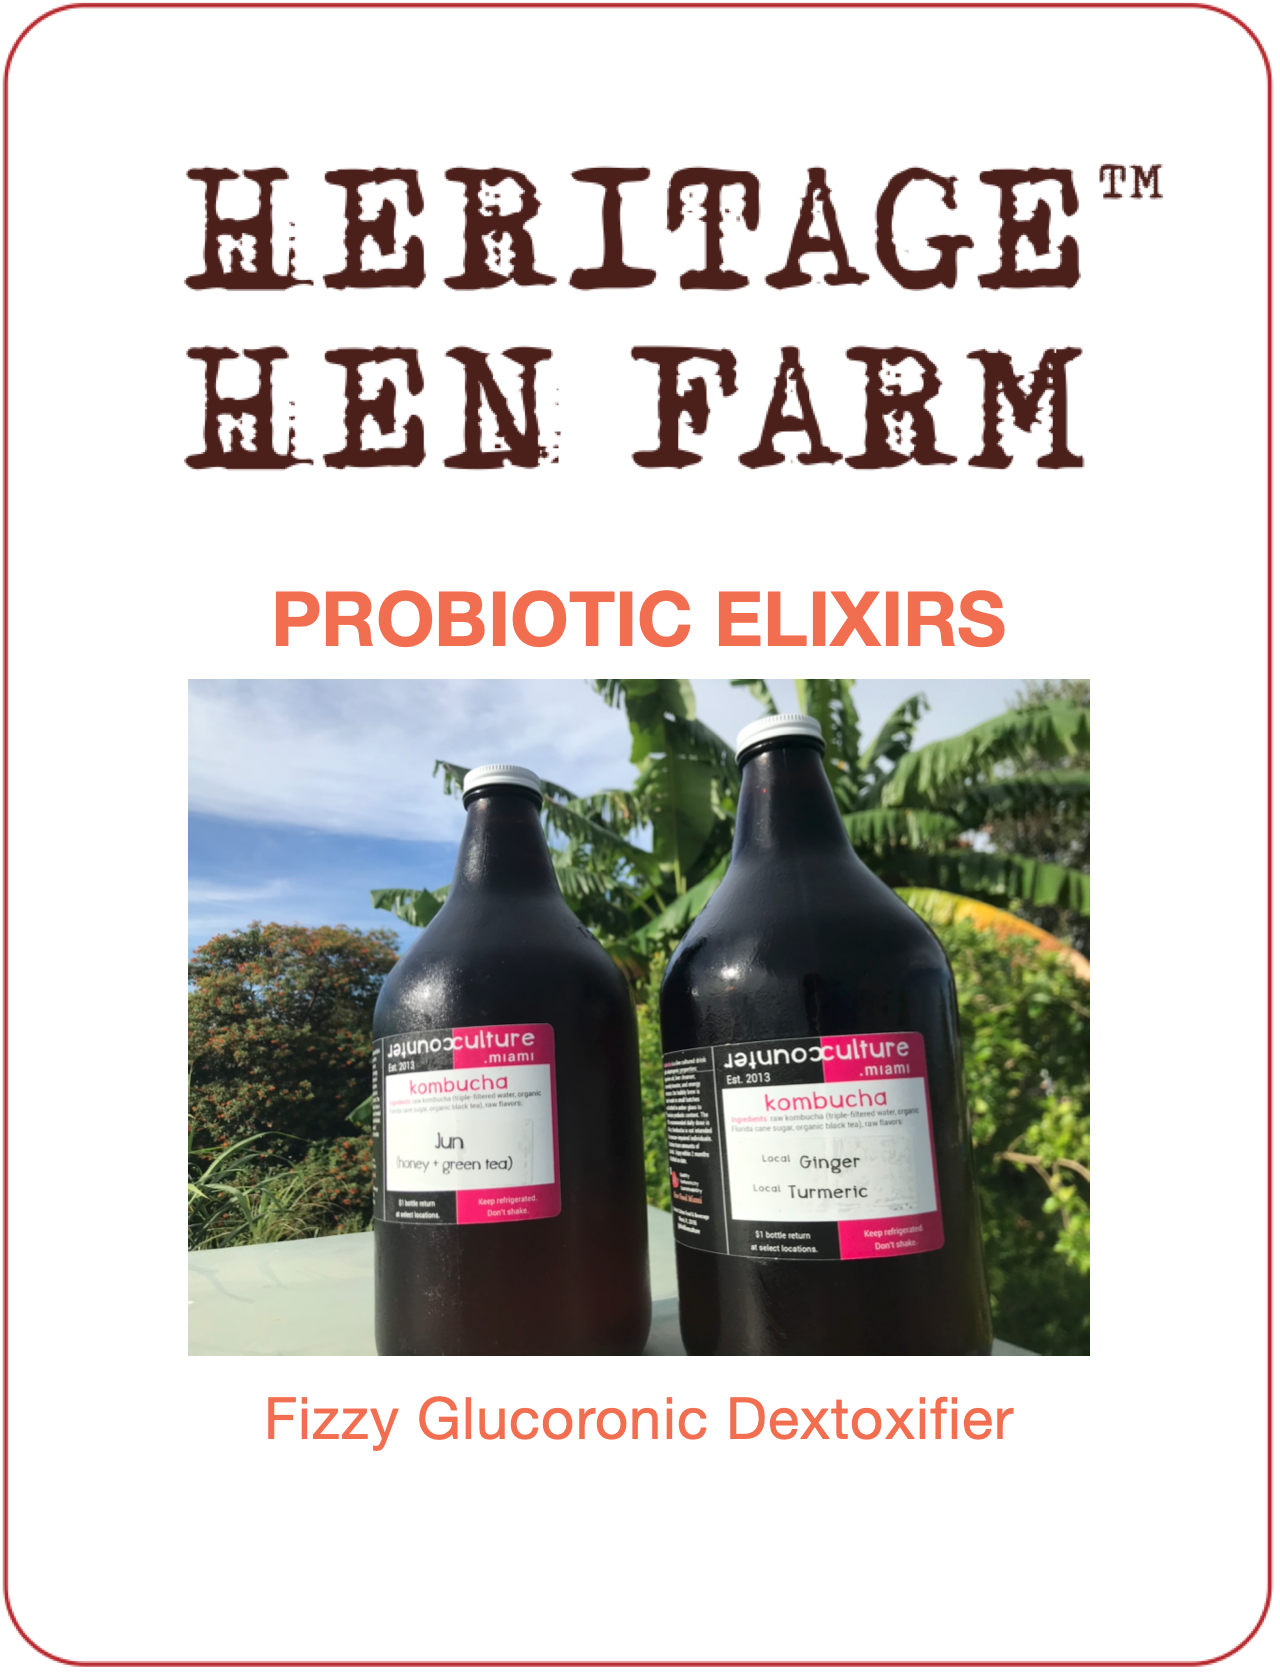 Probiotic Elixirs